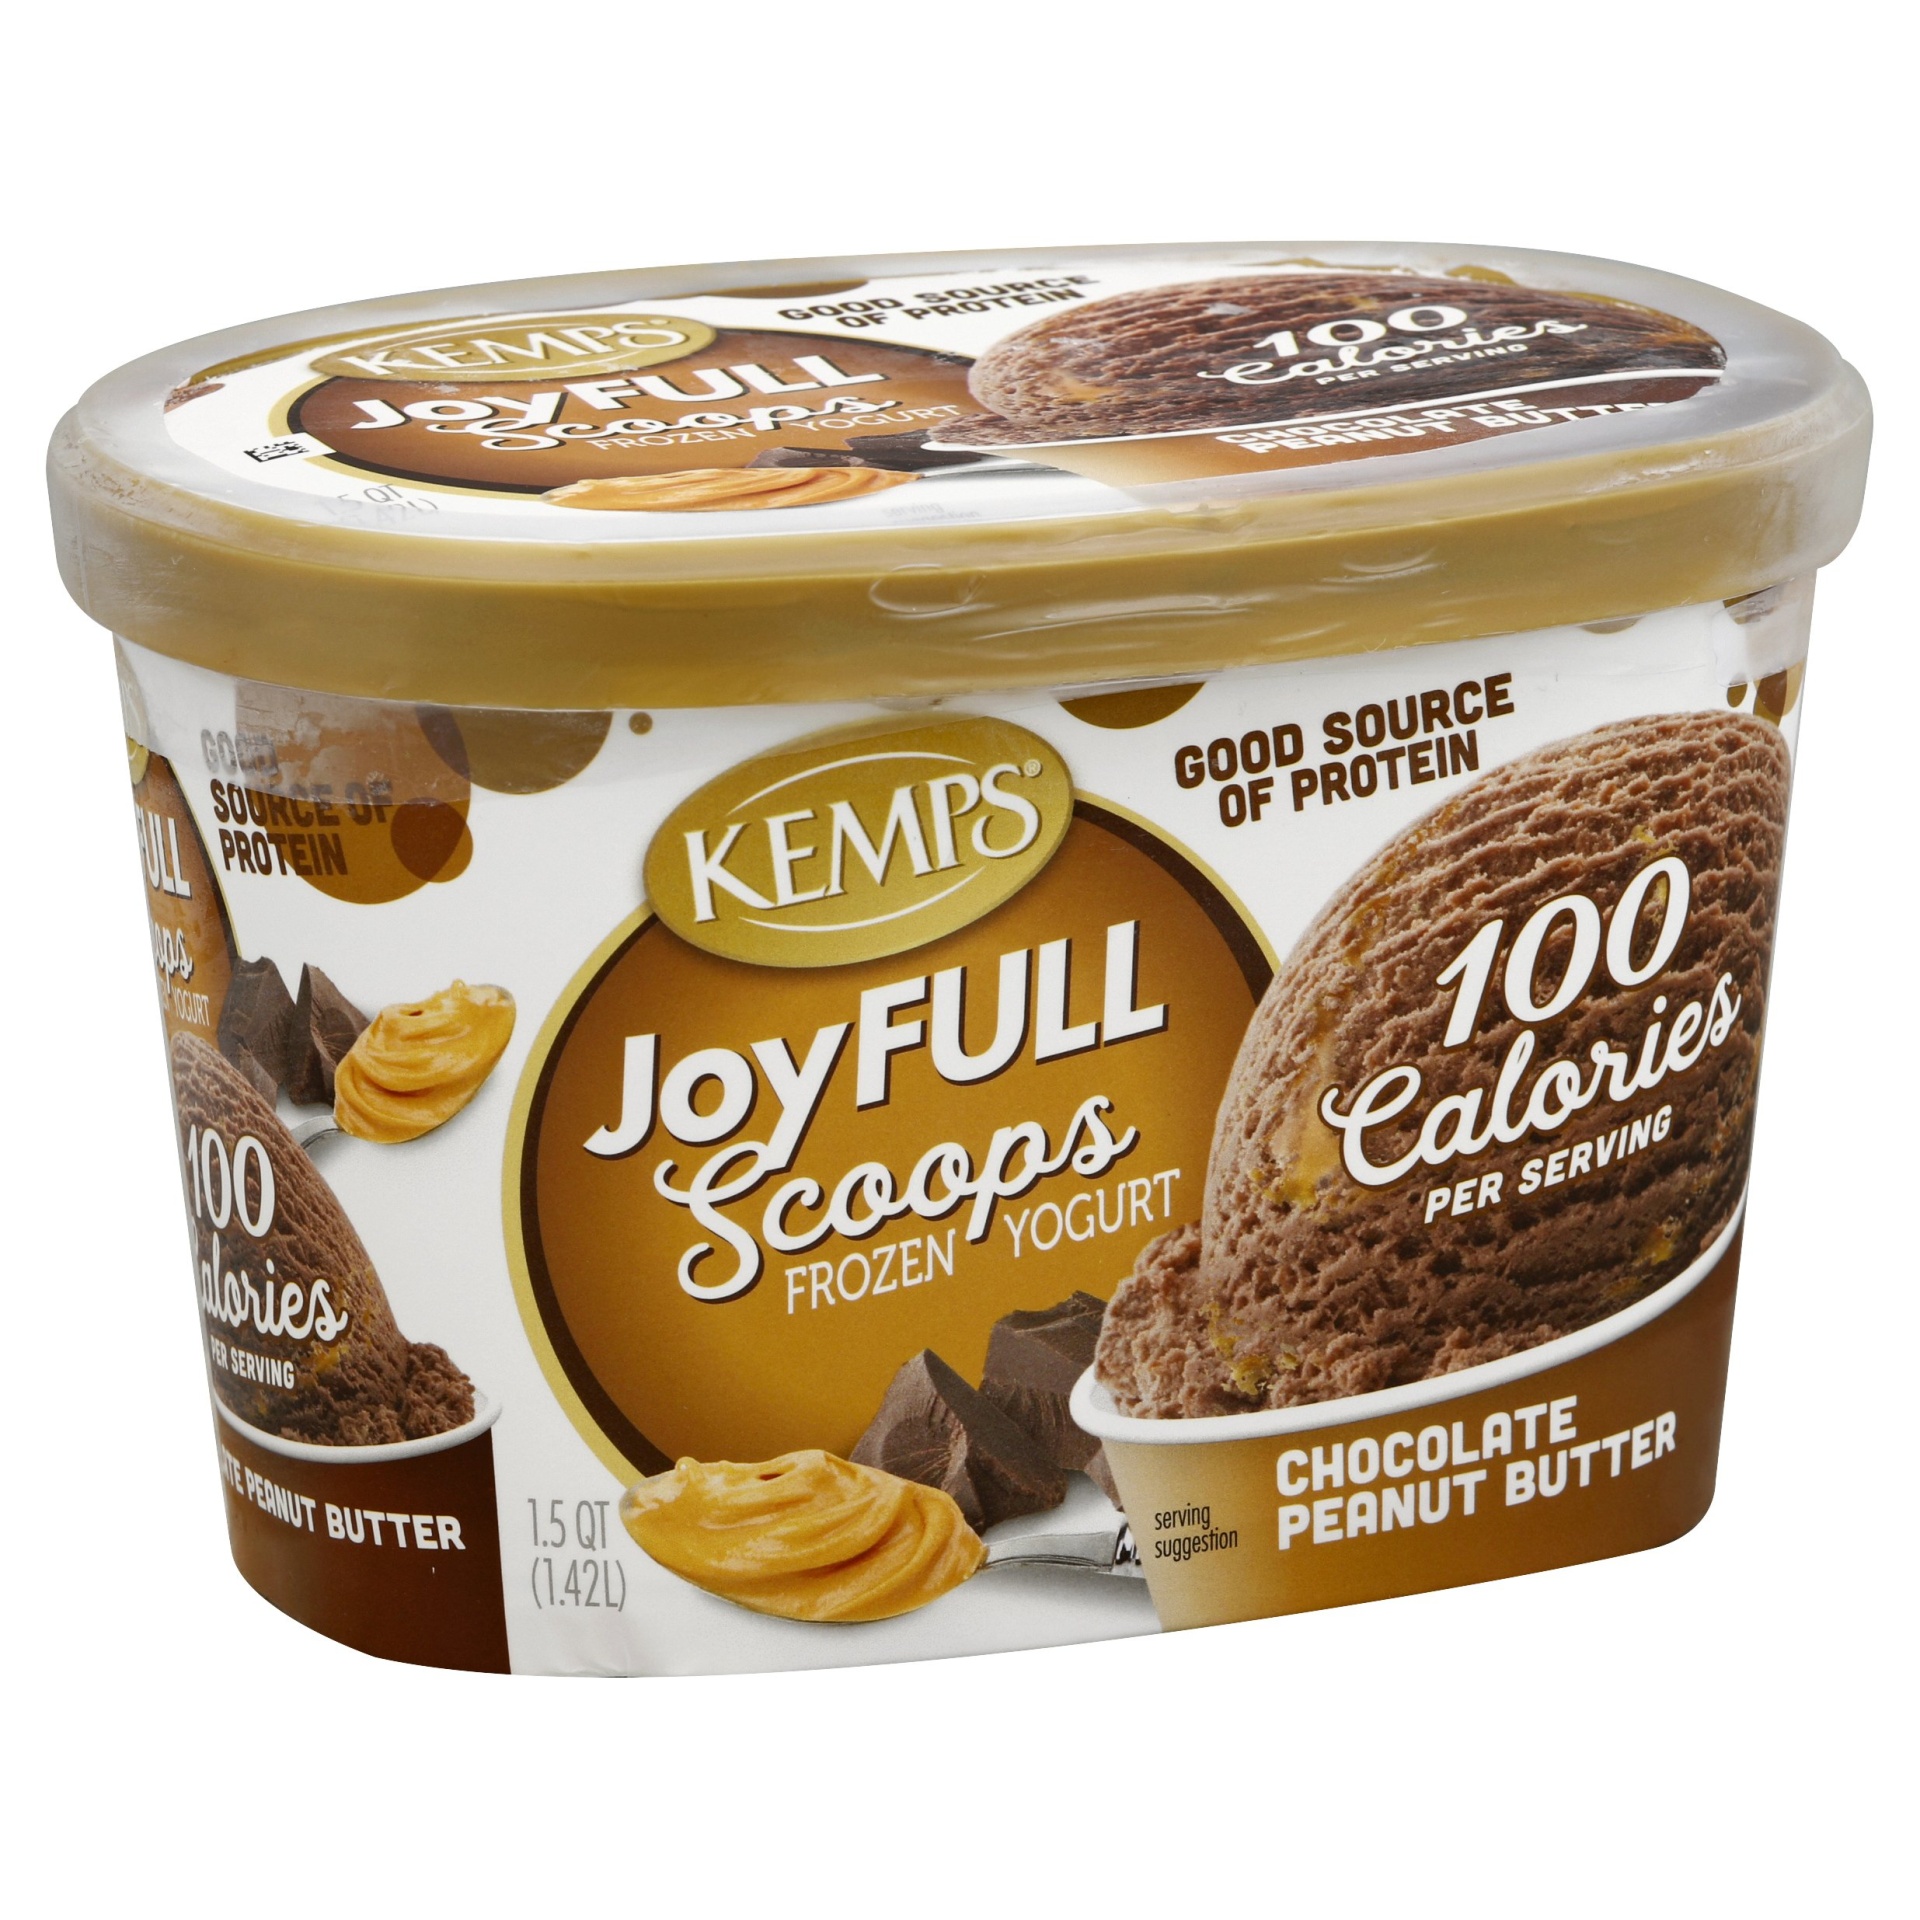 slide 1 of 1, Kemps JoyFULL Scoops Chocolate Peanut Butter Frozen Yogurt, 1.5 qt